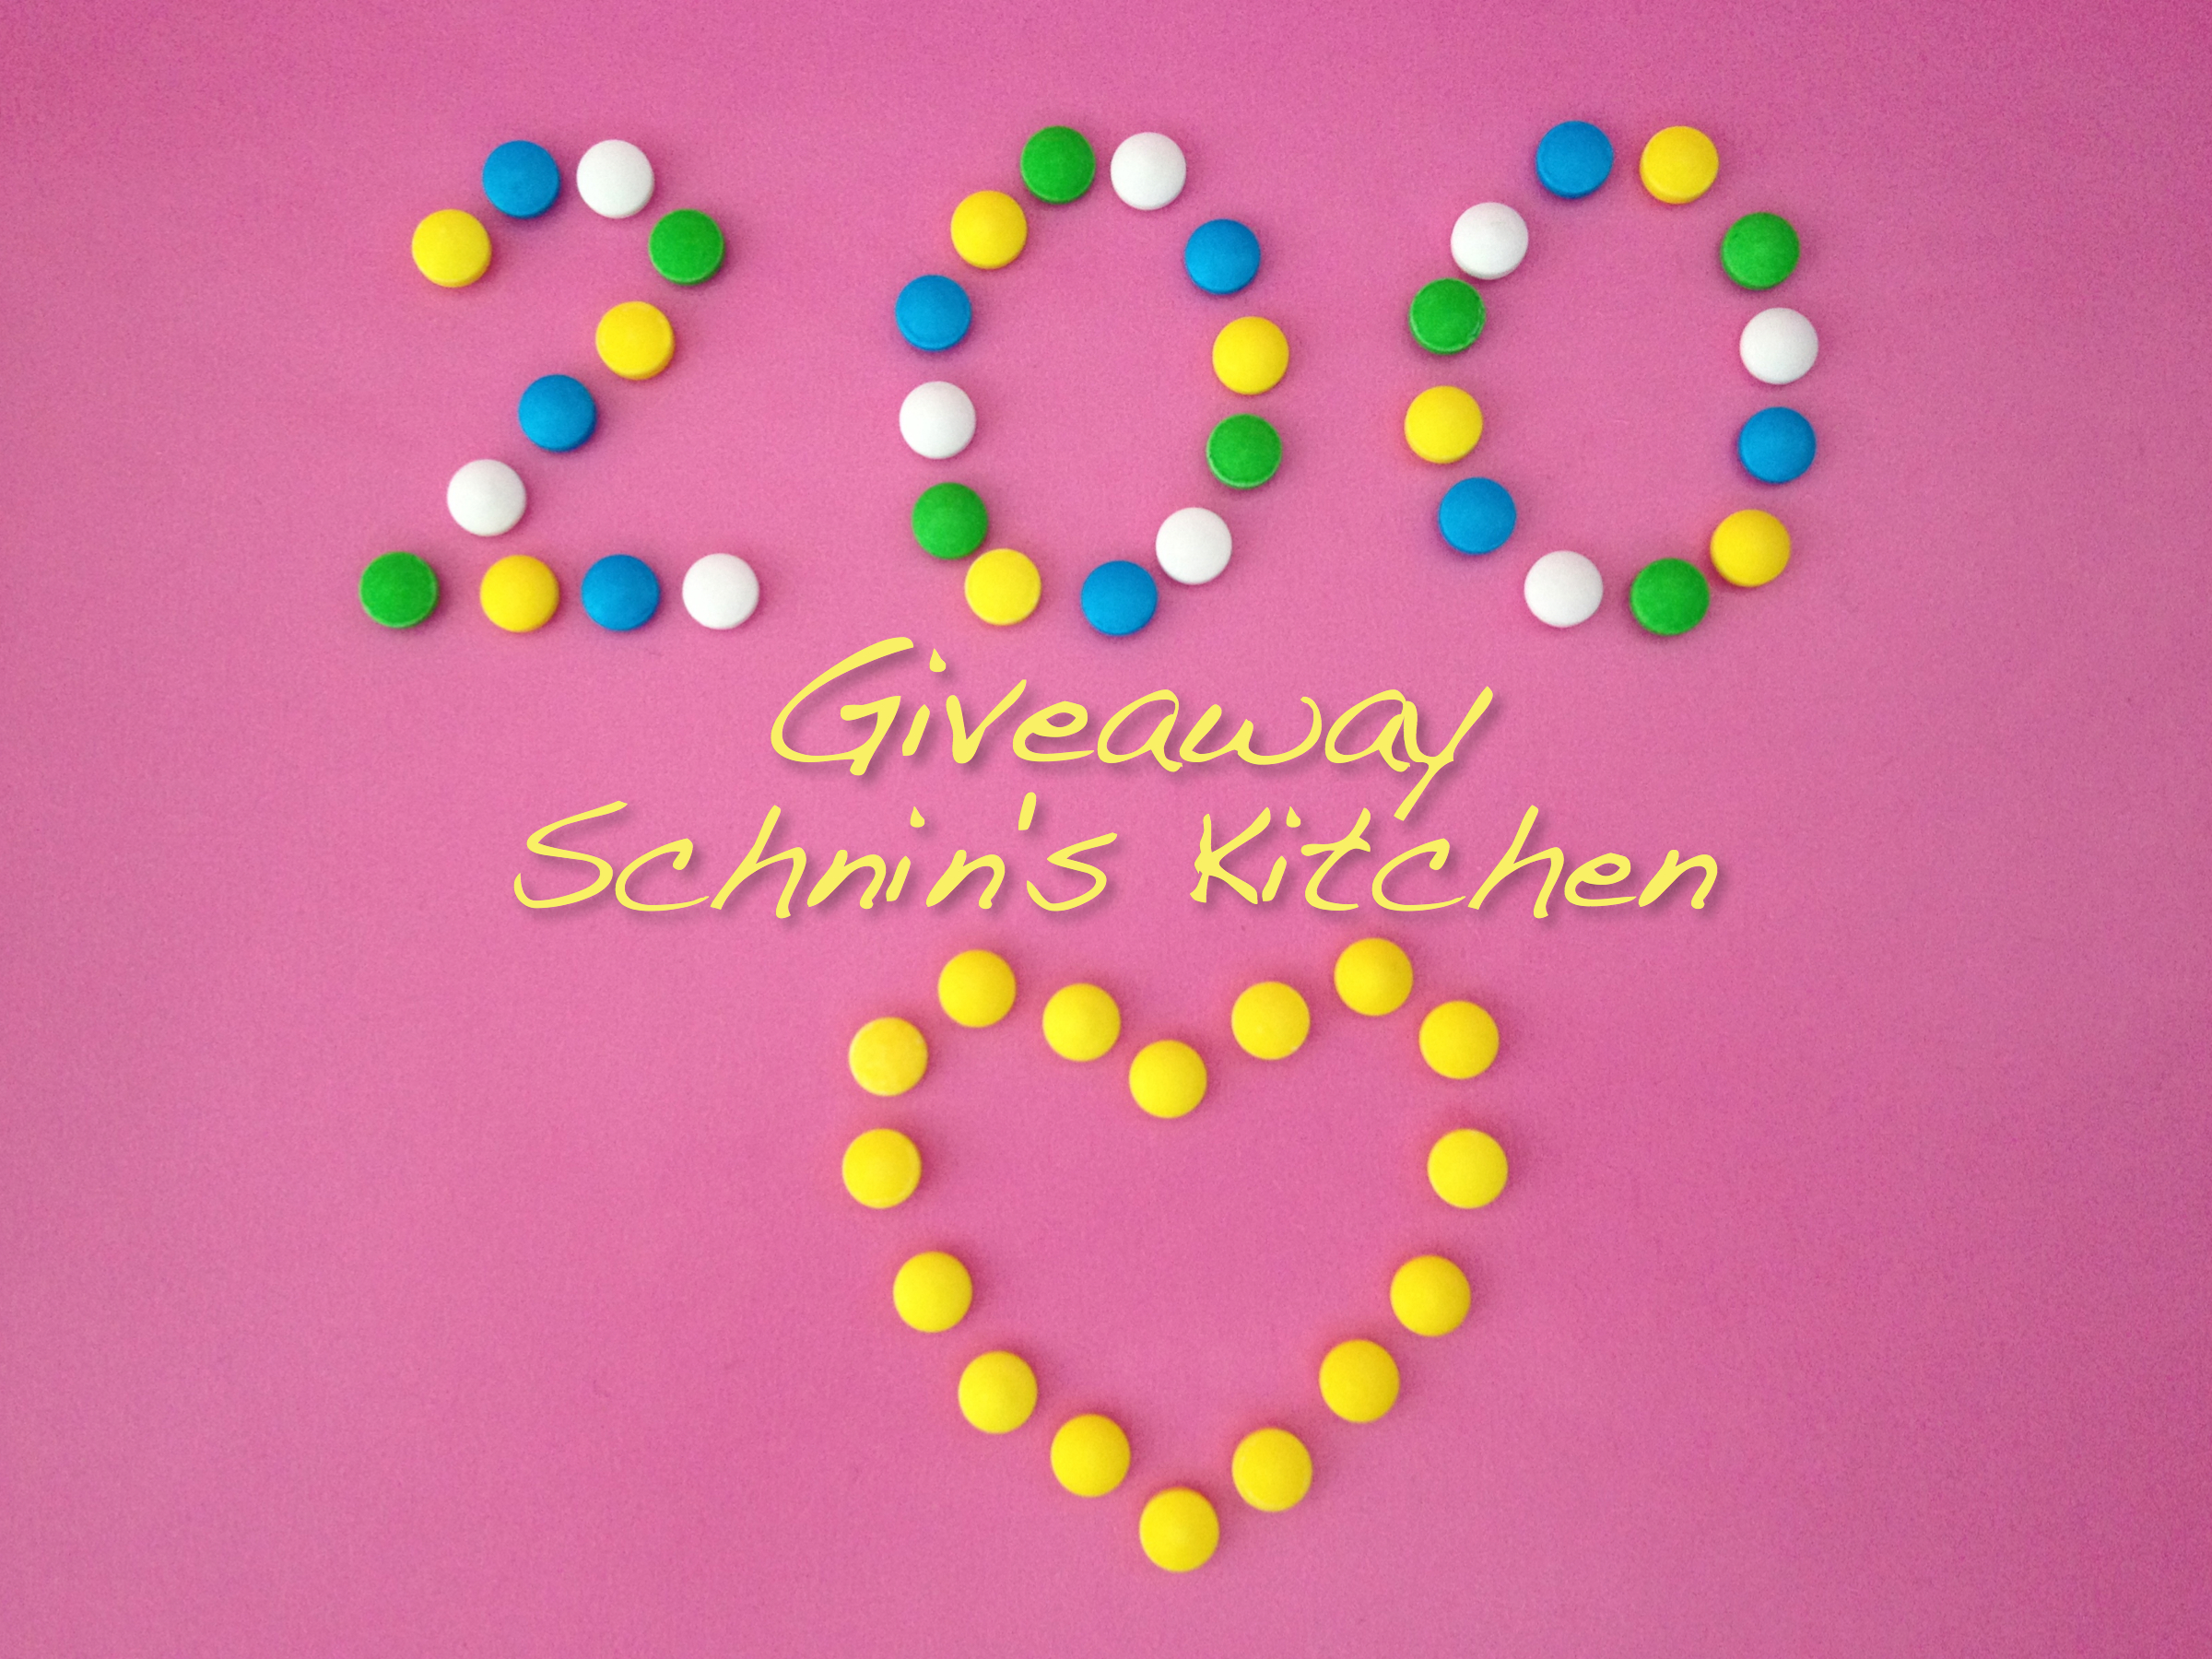 Schnin's Kitchen: 200 Giveaway